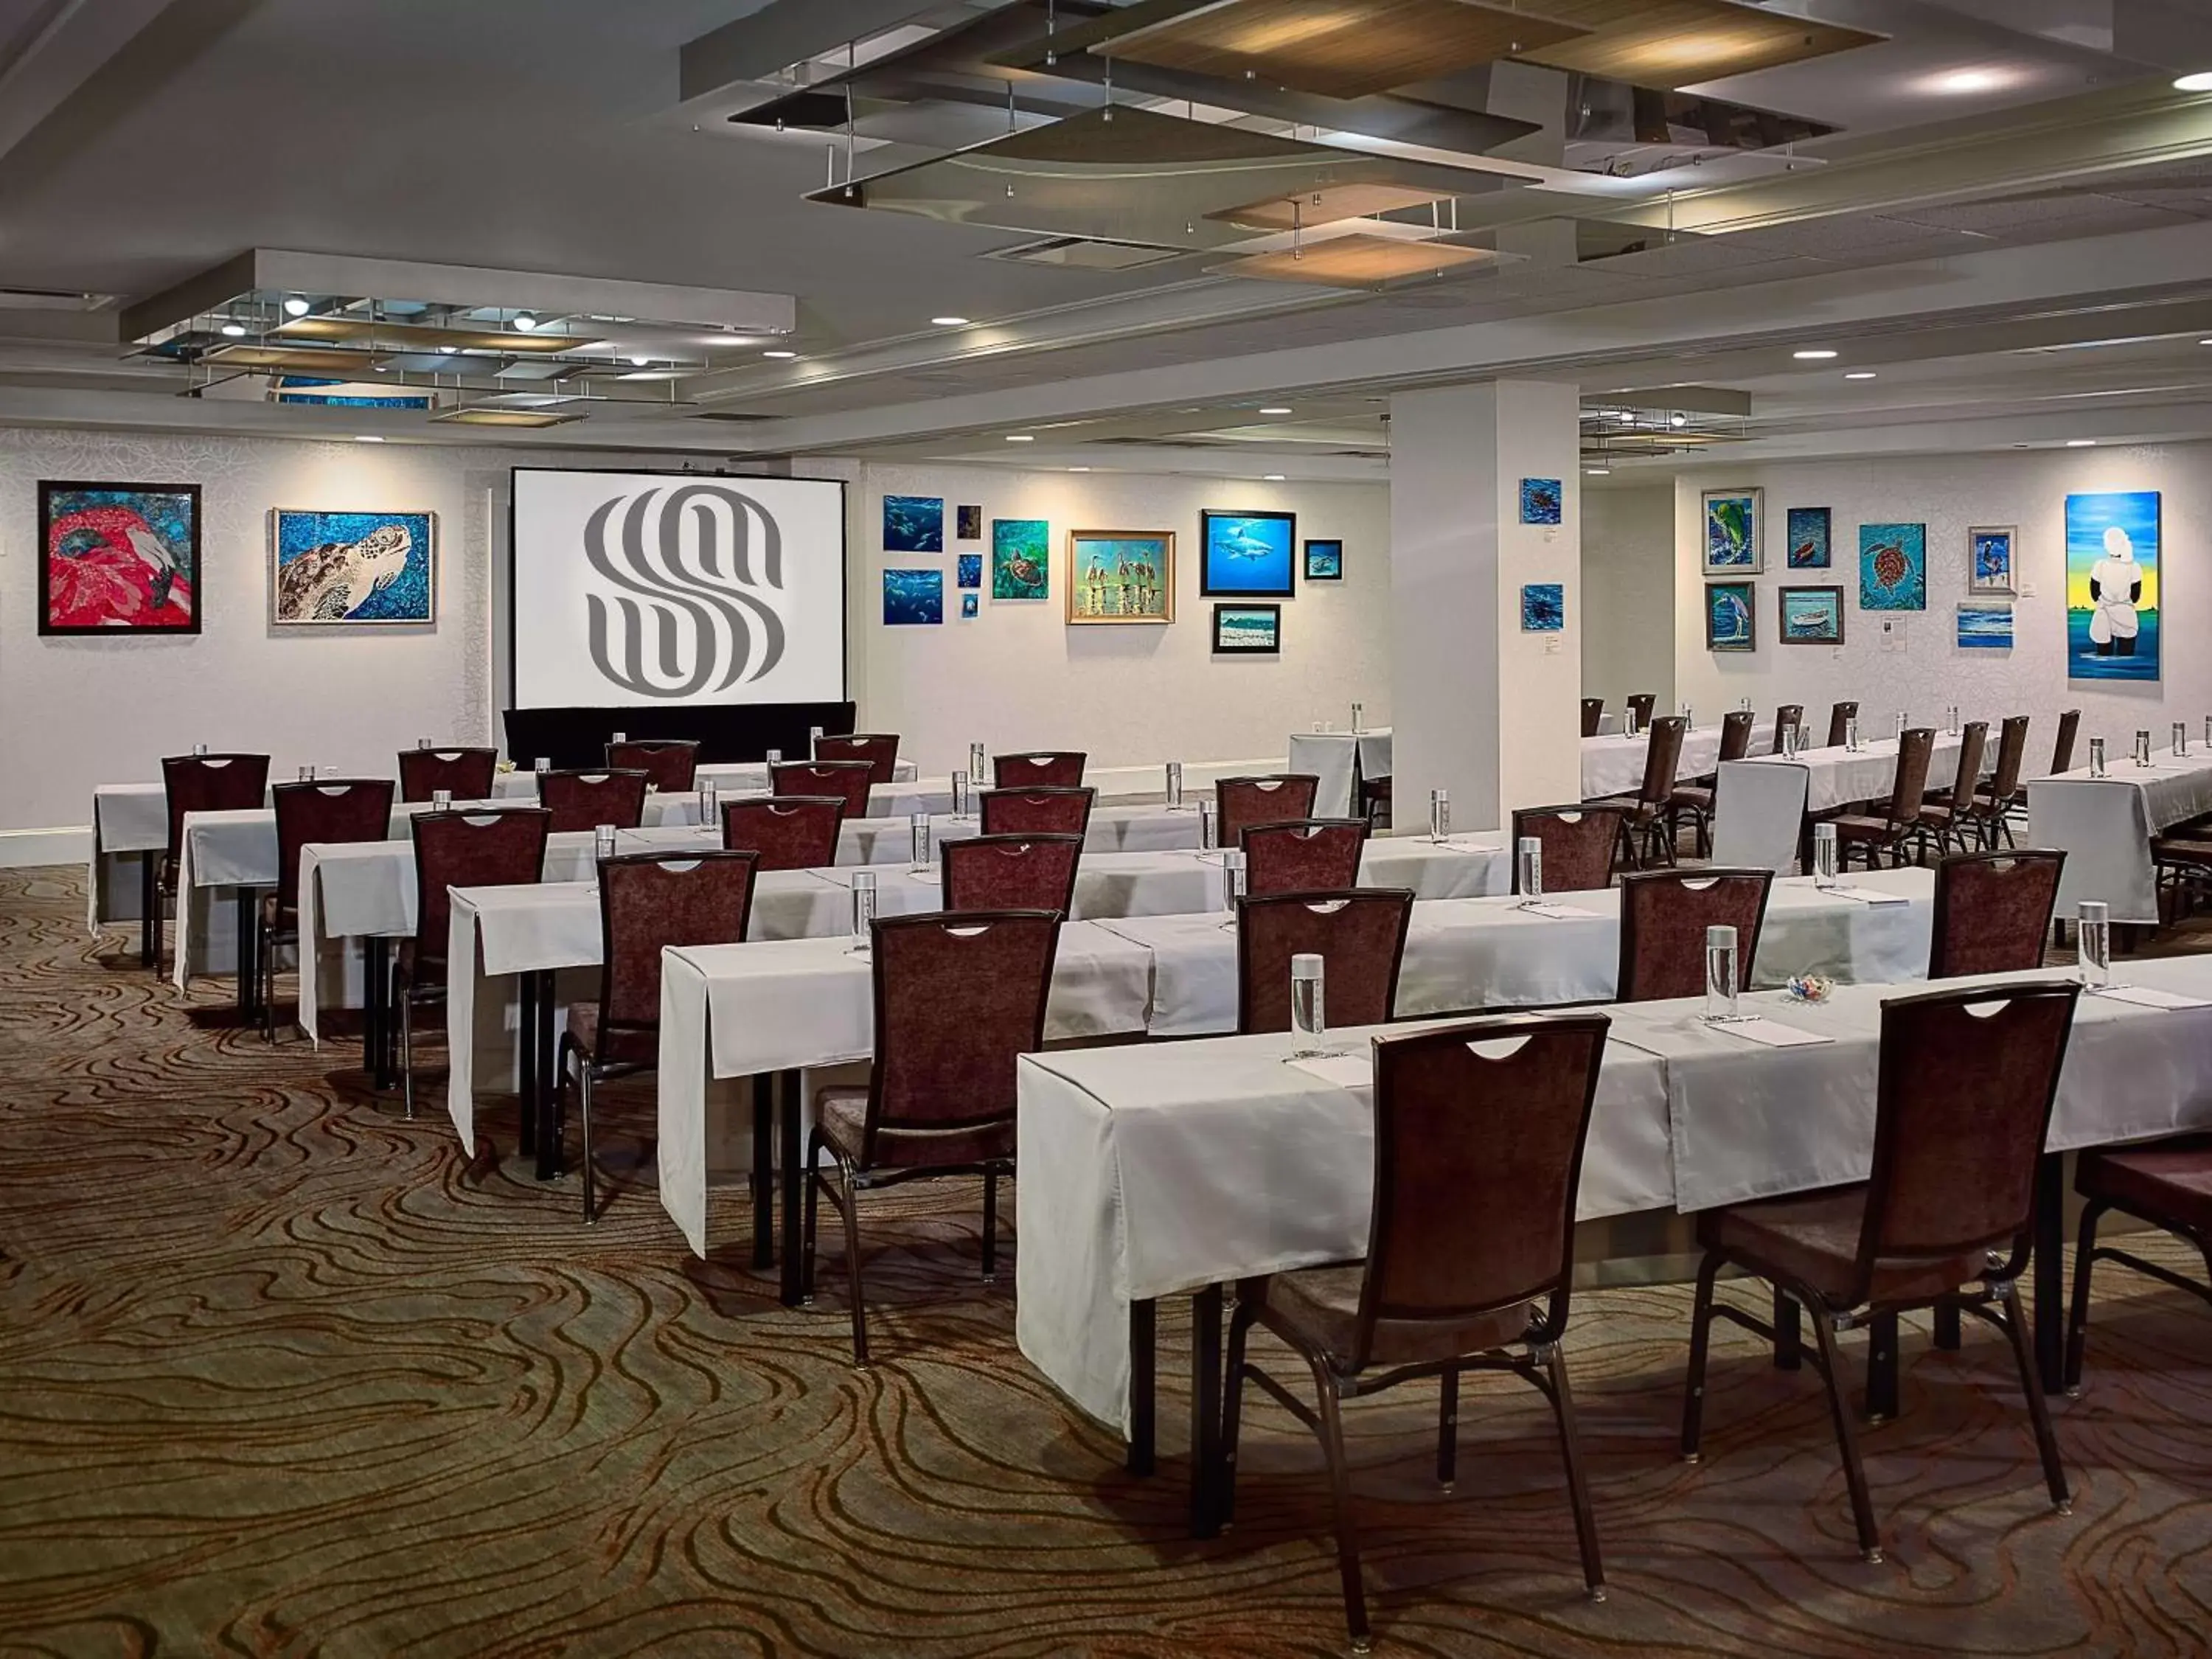 On site, Restaurant/Places to Eat in Sonesta Resort Hilton Head Island